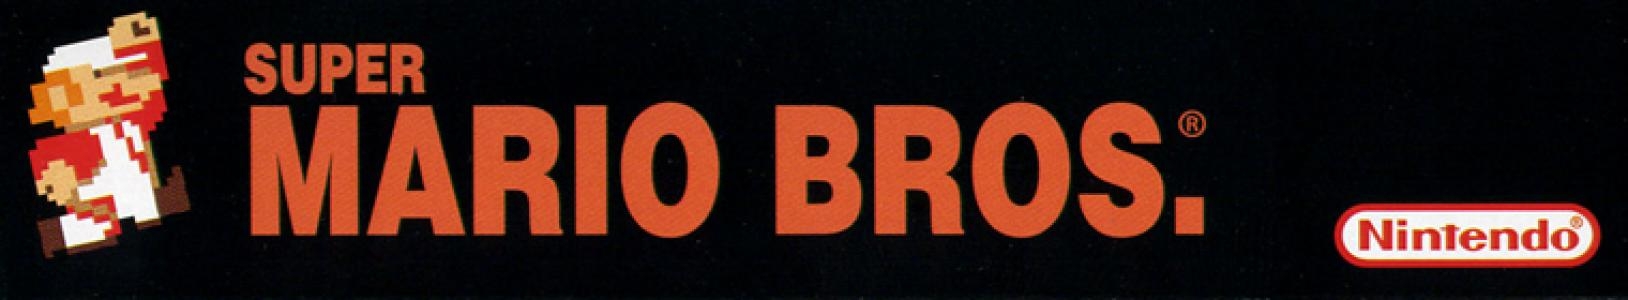 Super Mario Bros. / Duck Hunt banner